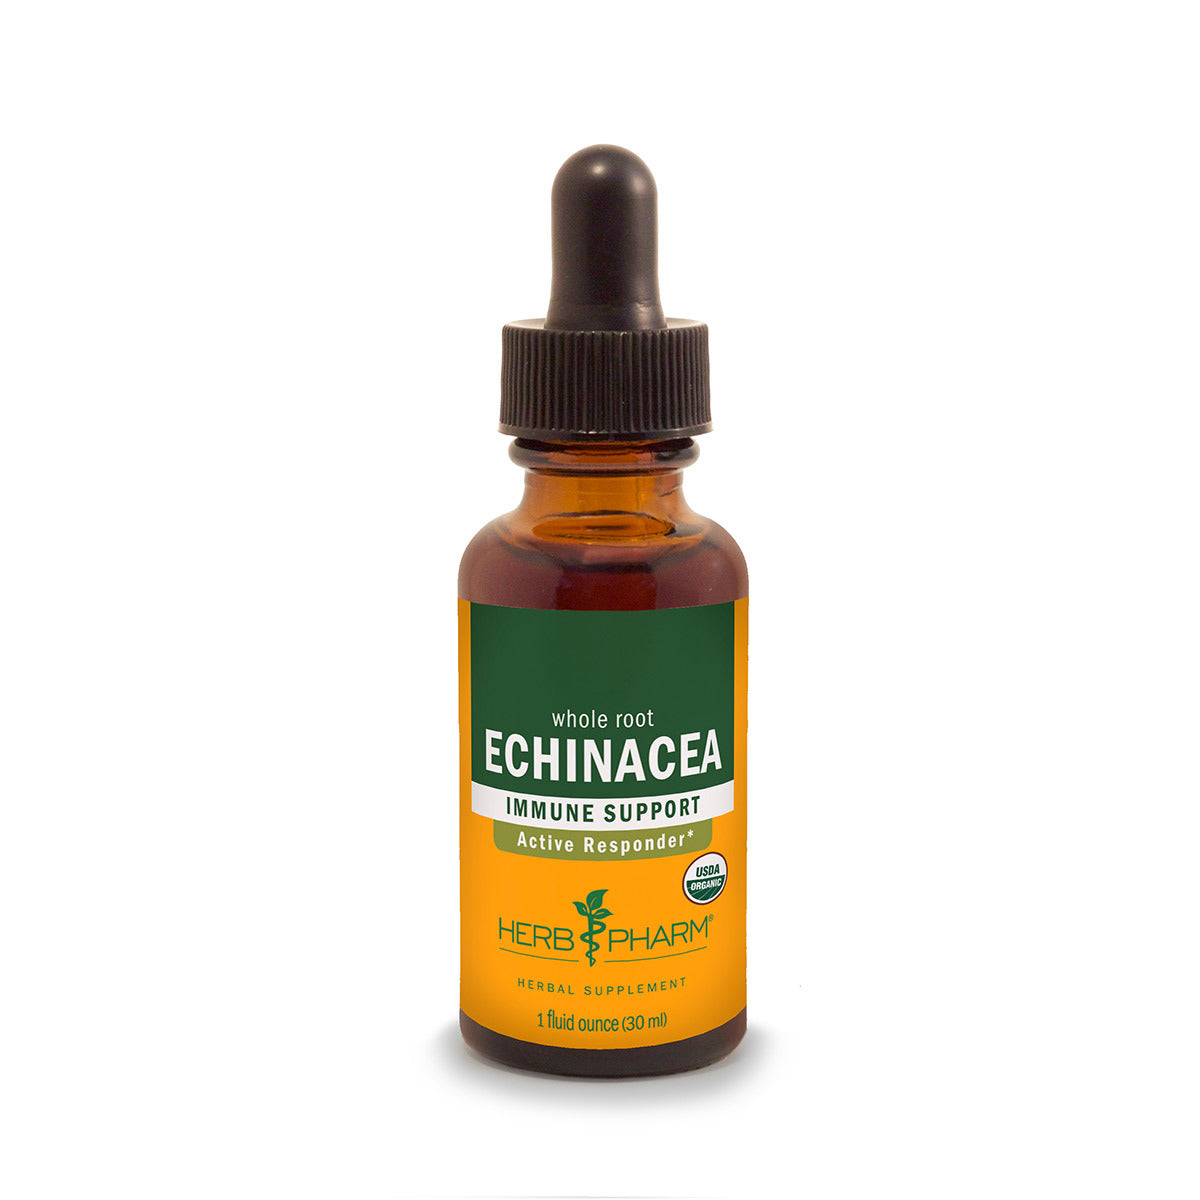 Primary image of Echinacea Extract